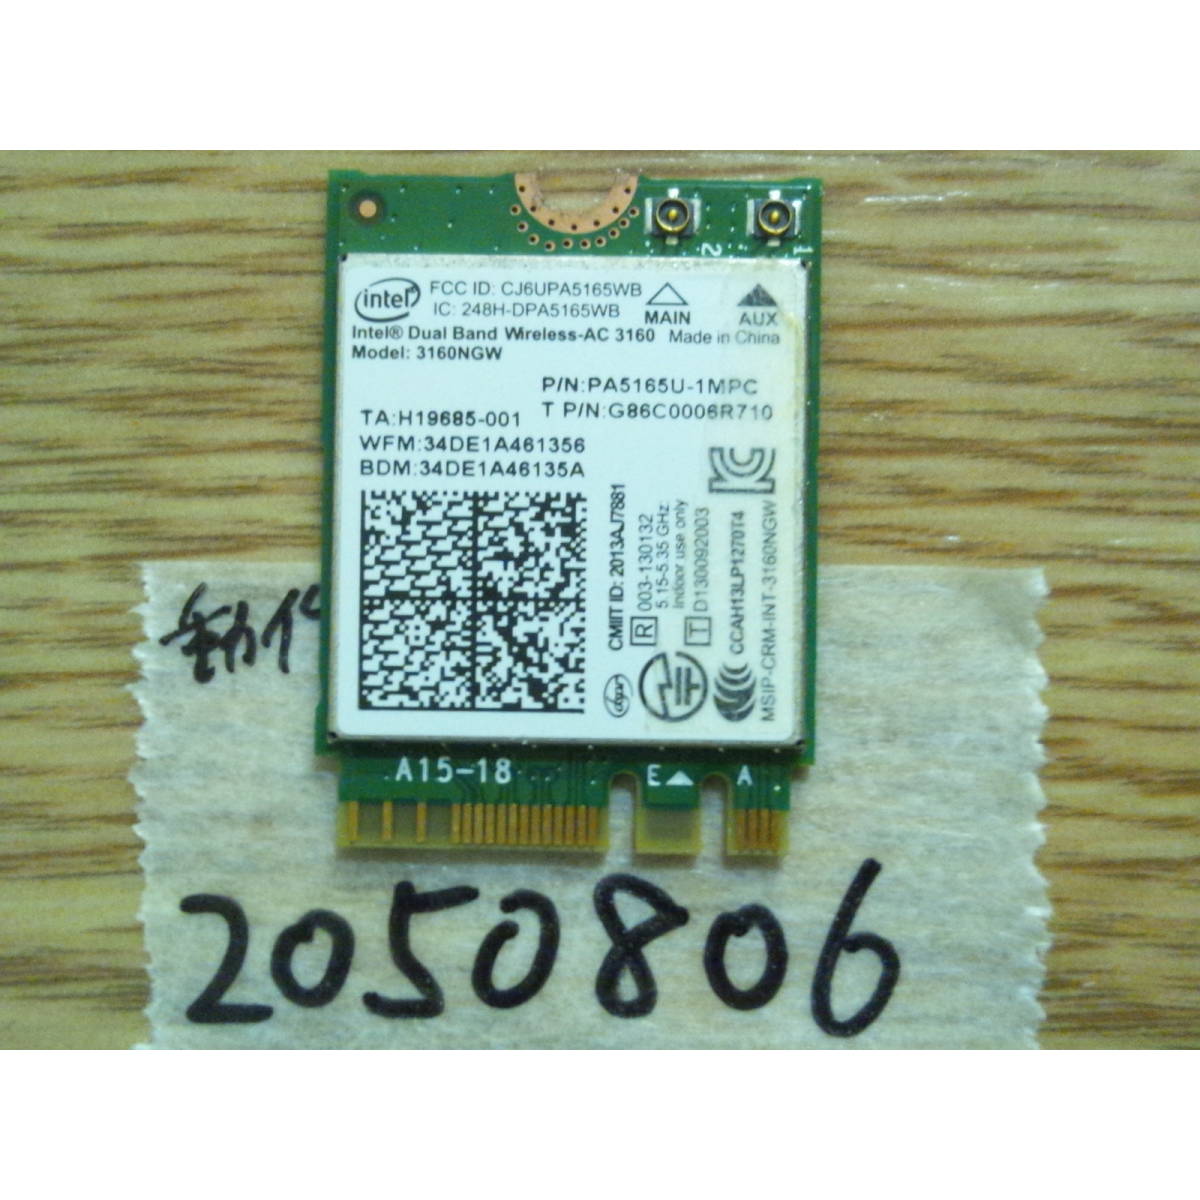 無線LAN(Wi-Fi)カード3160NGW NGFF M2 Bluetooth(2050806